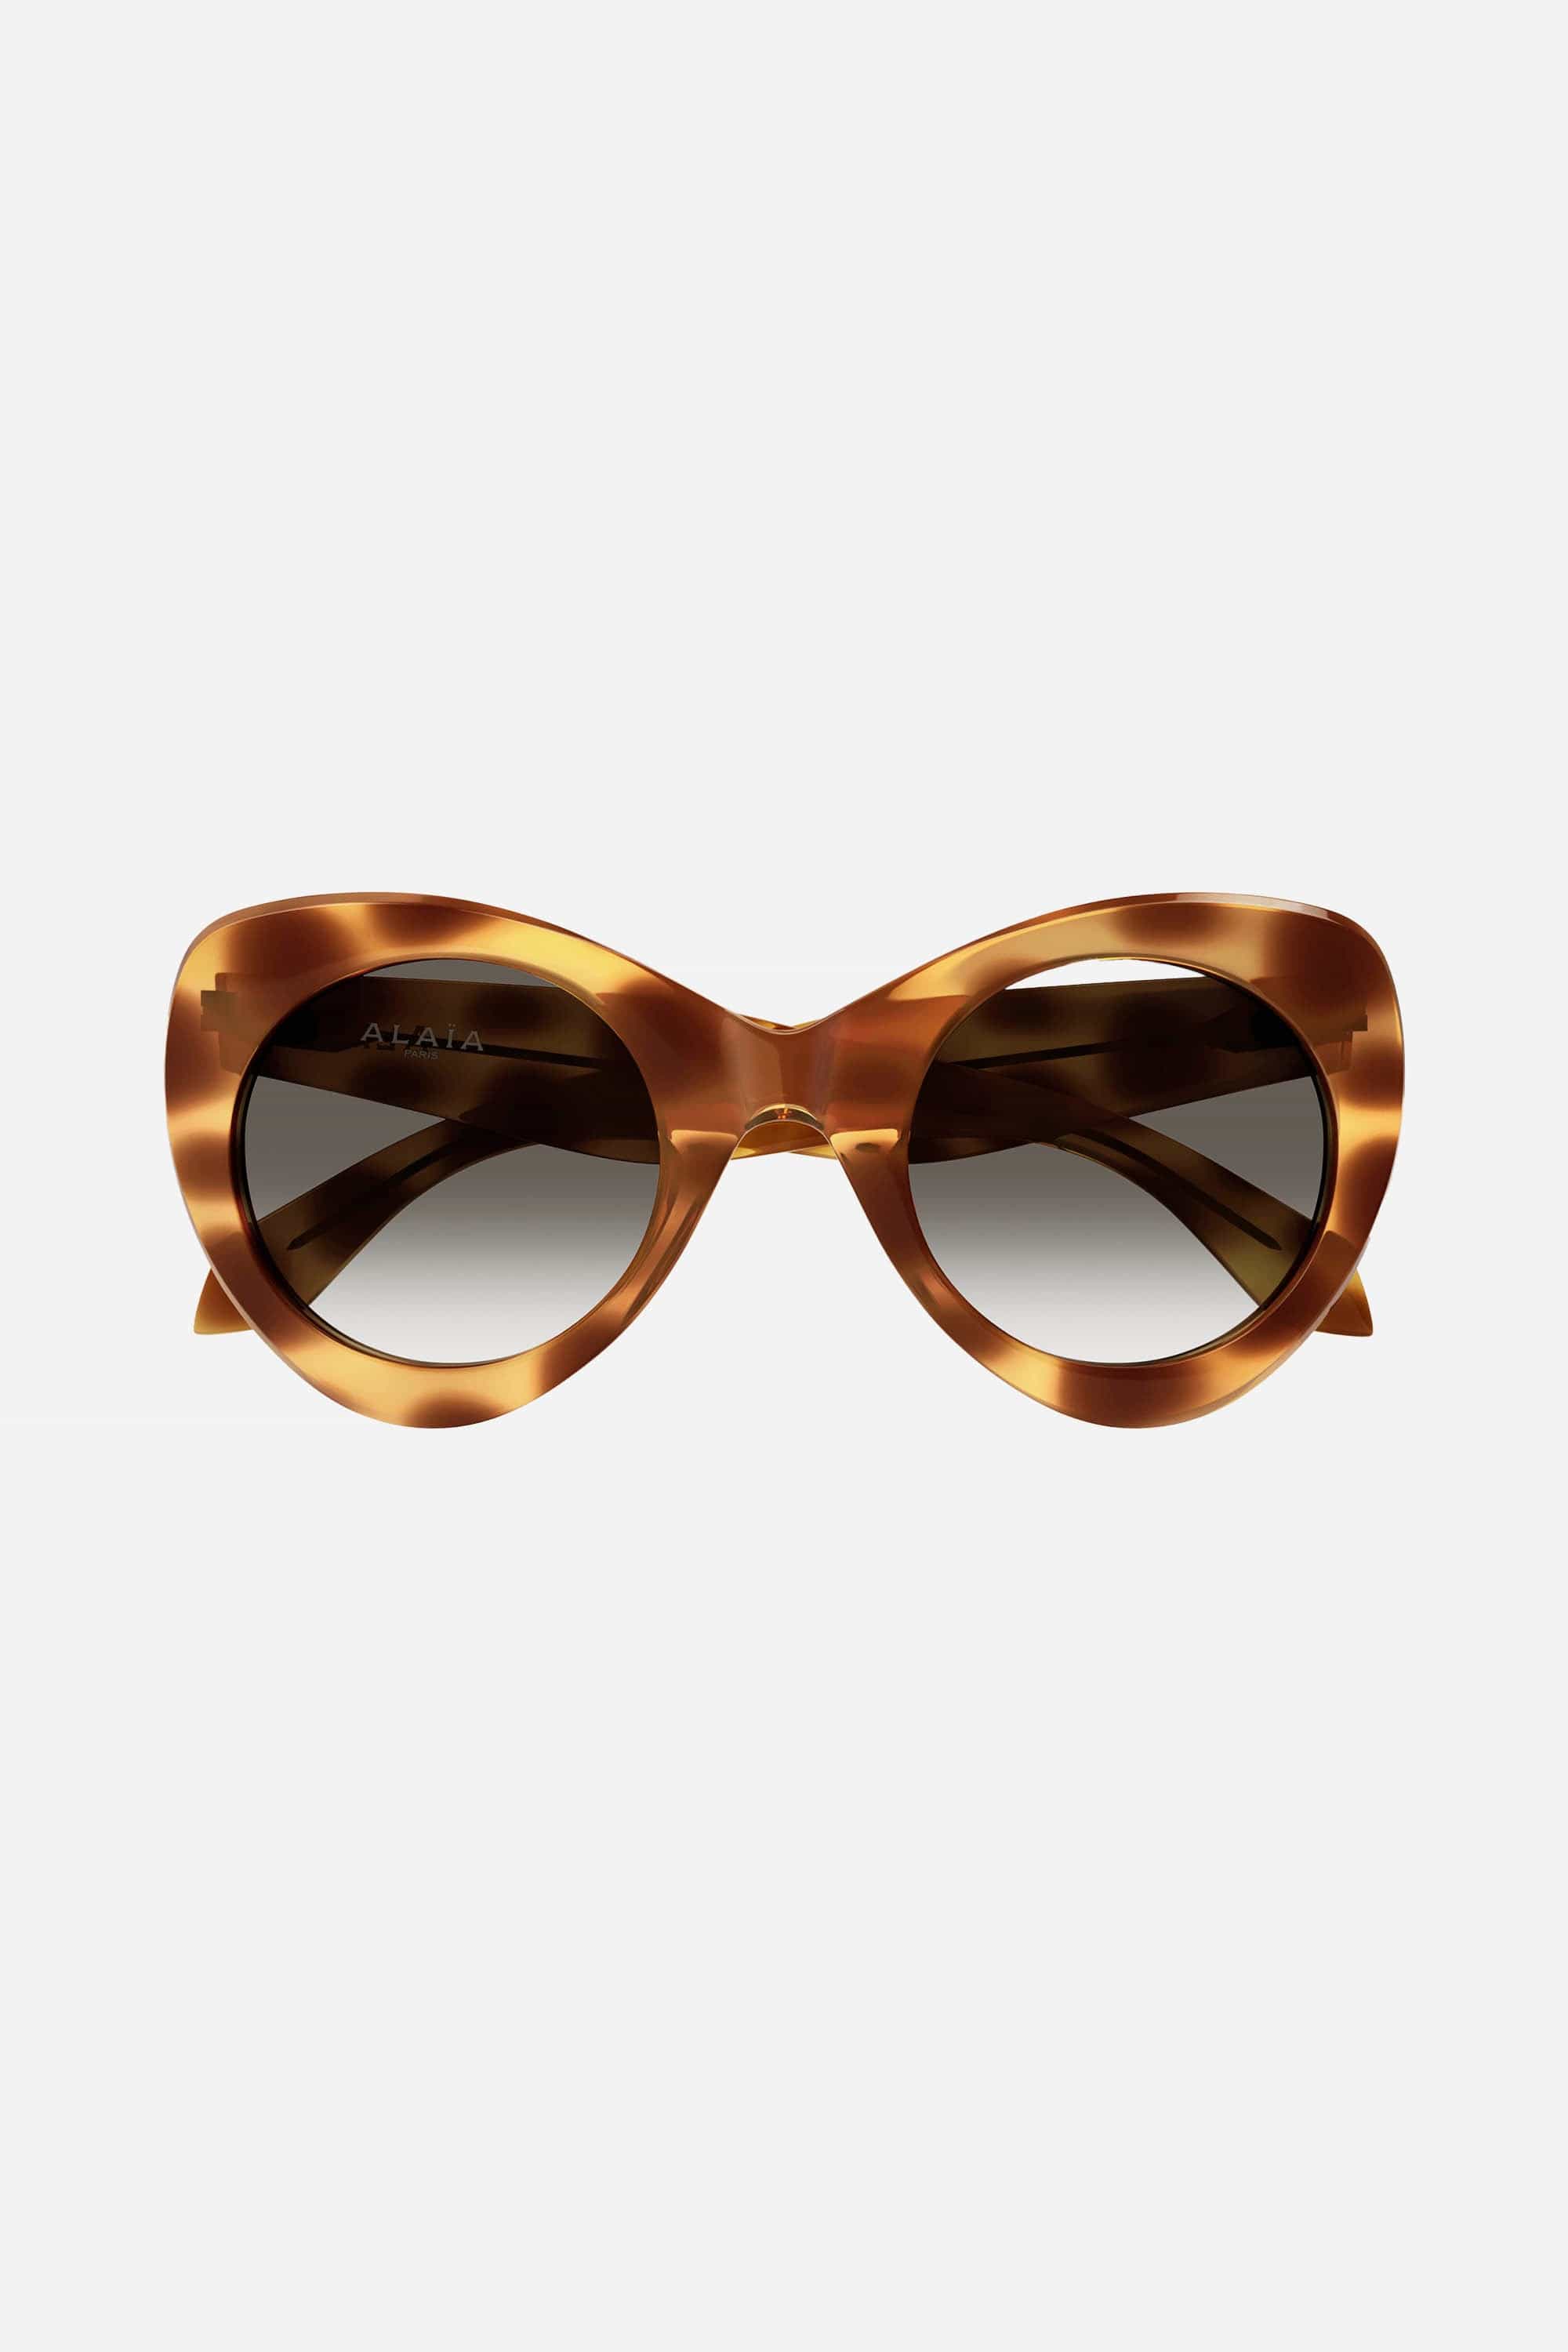 Alaia cat-eye brown sunglasses - Eyewear Club